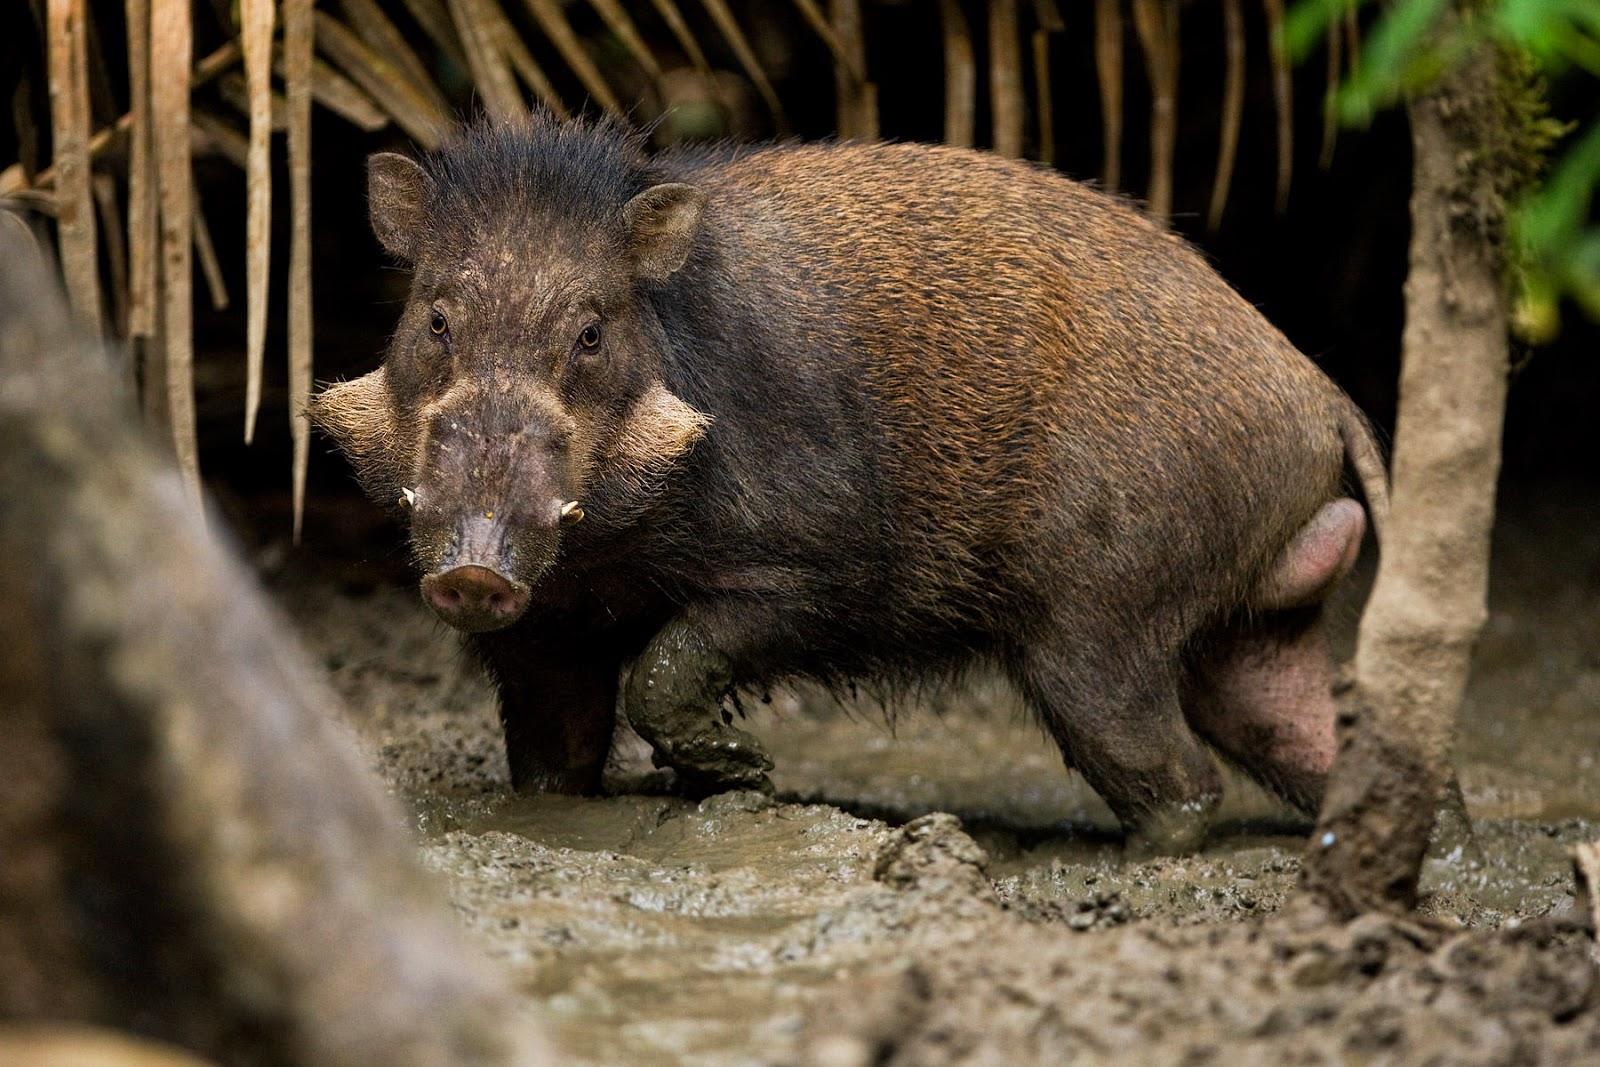 fast pics2: danger wild pigs wallpaper, wild pig picture